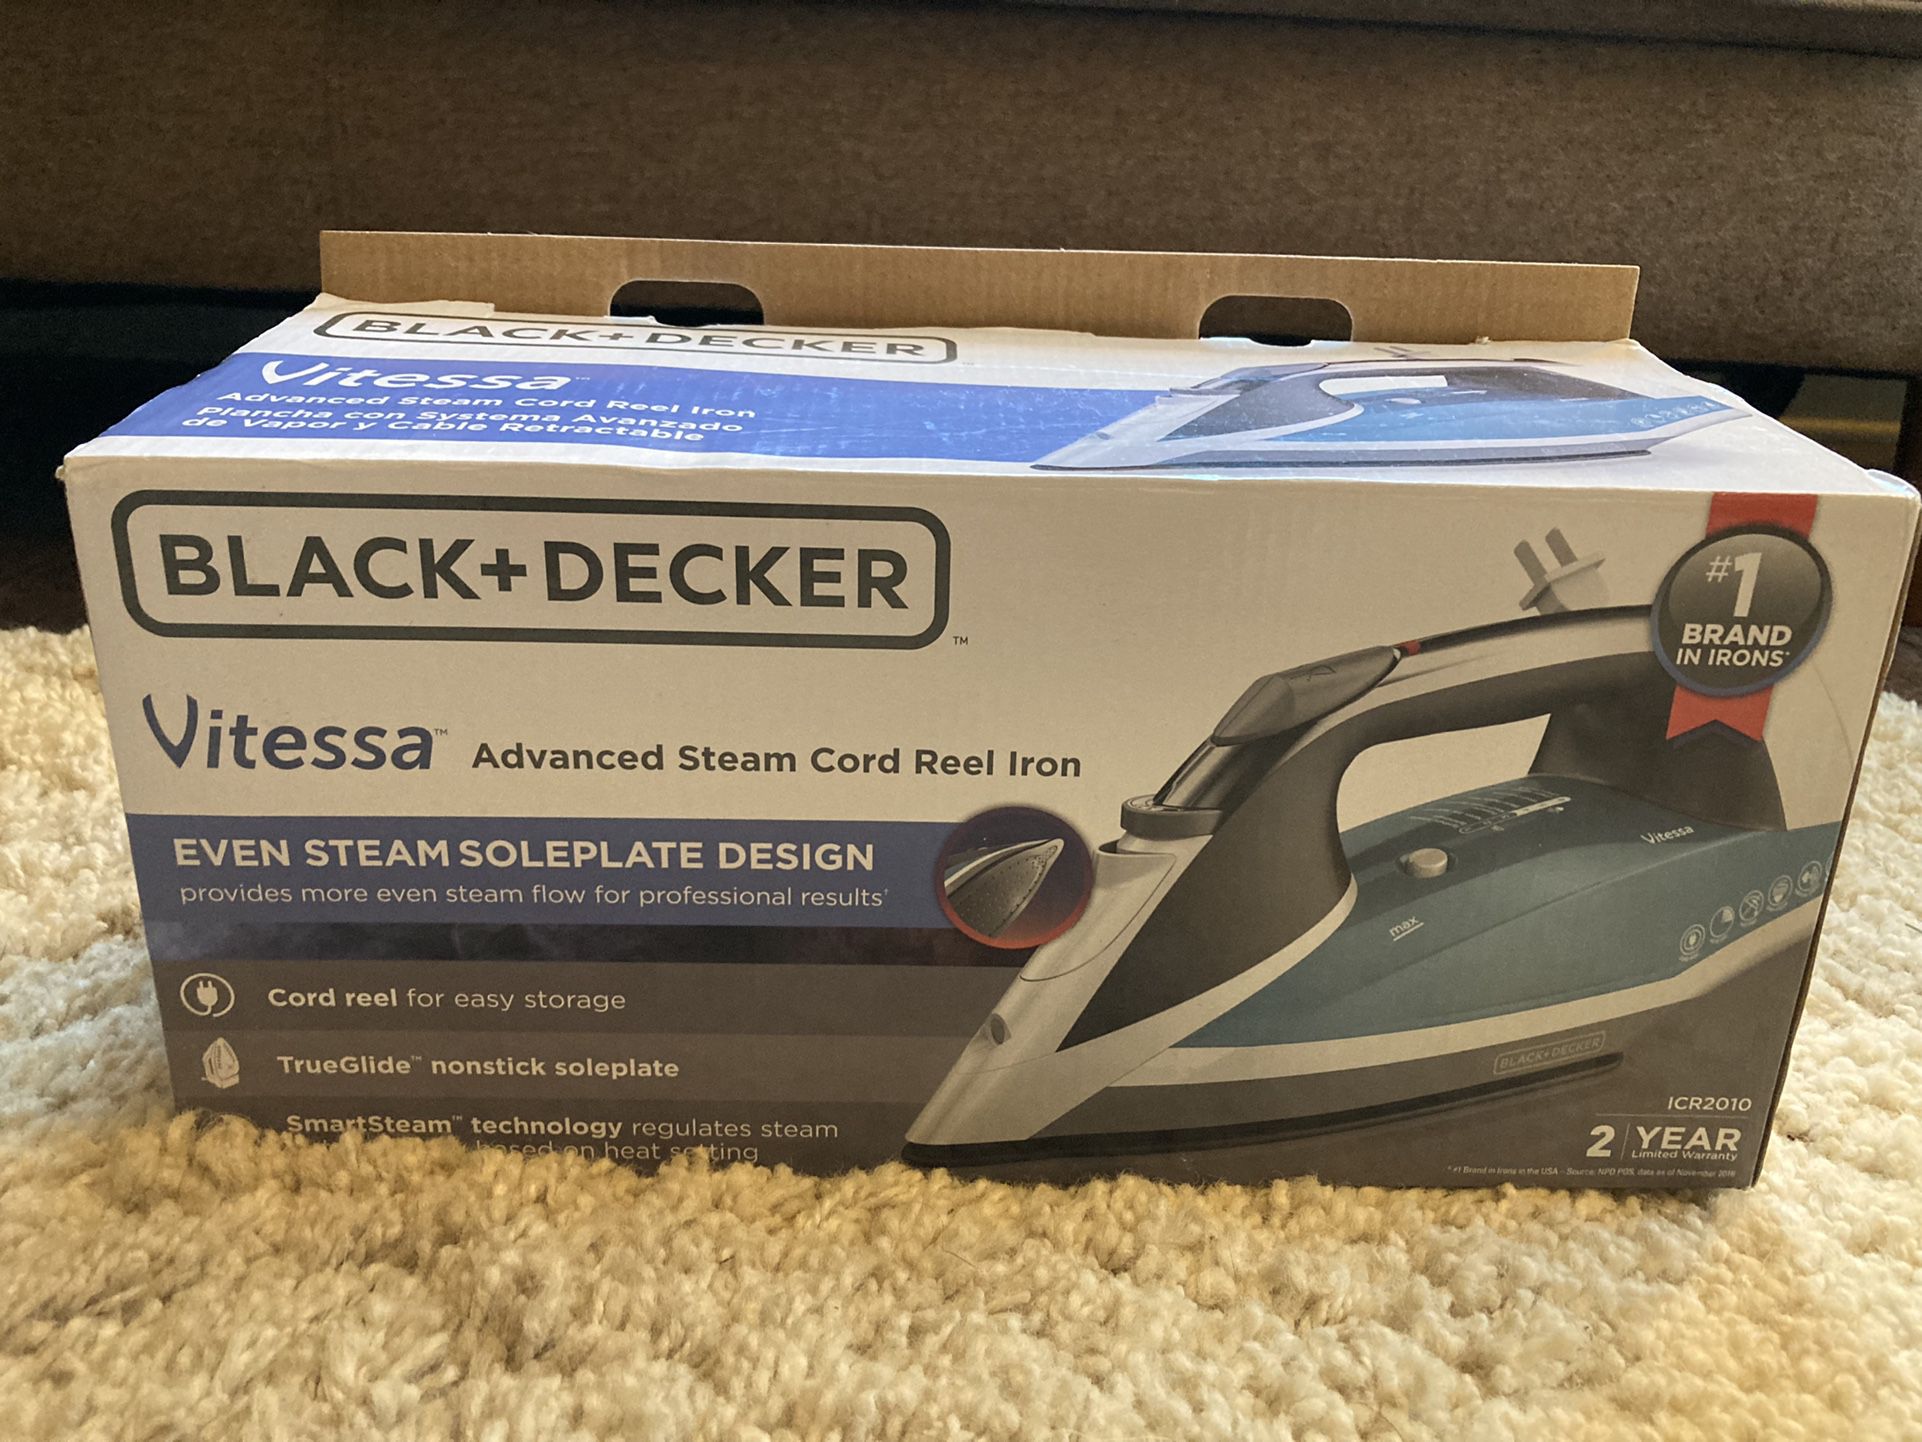 Black & Decker digital Advantage steam iron for Sale in Parker, CO - OfferUp